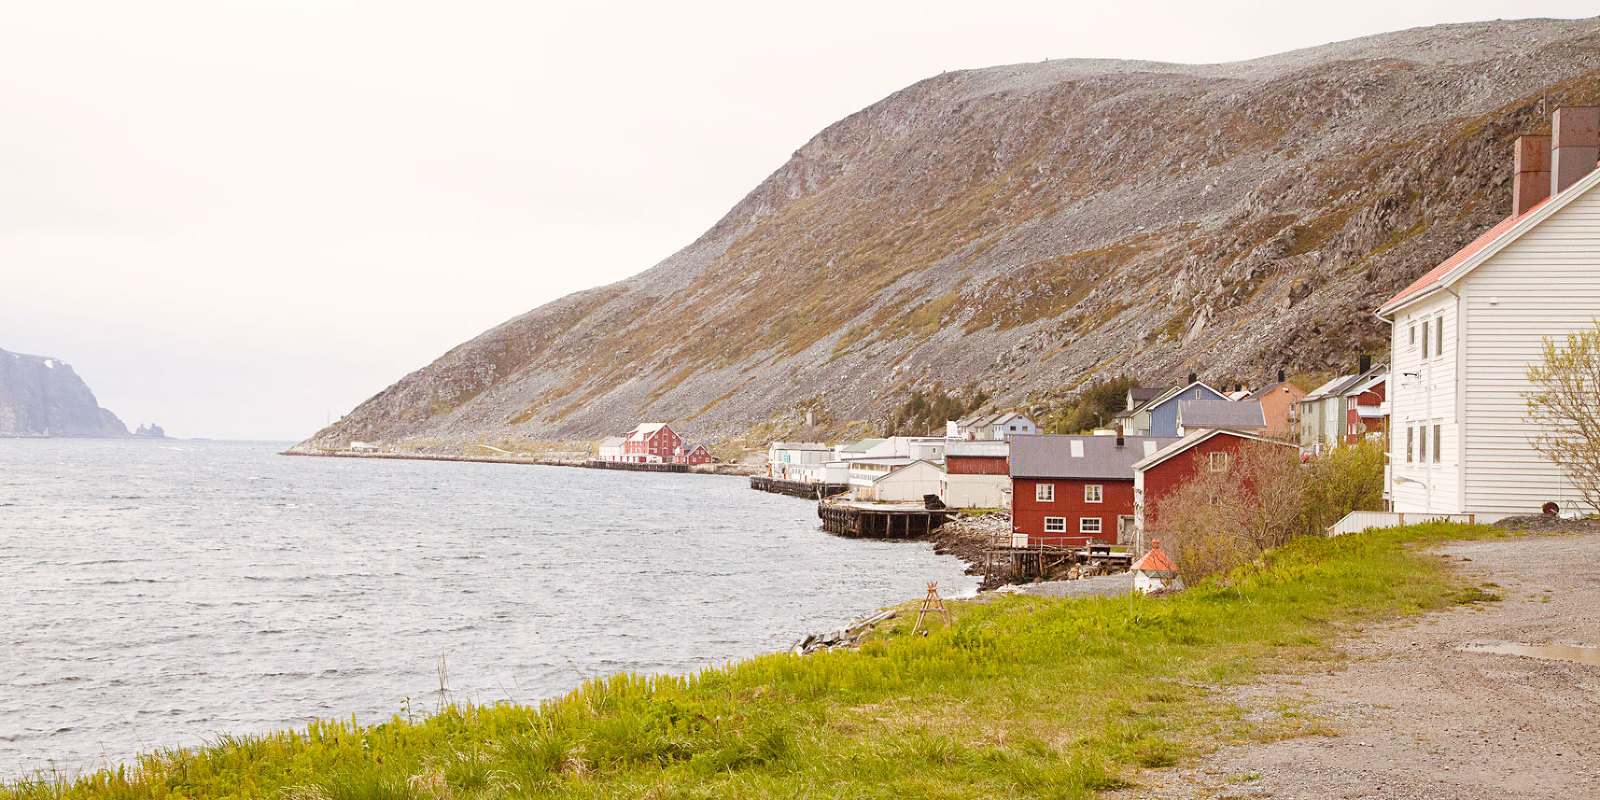 Kjollefjord Village